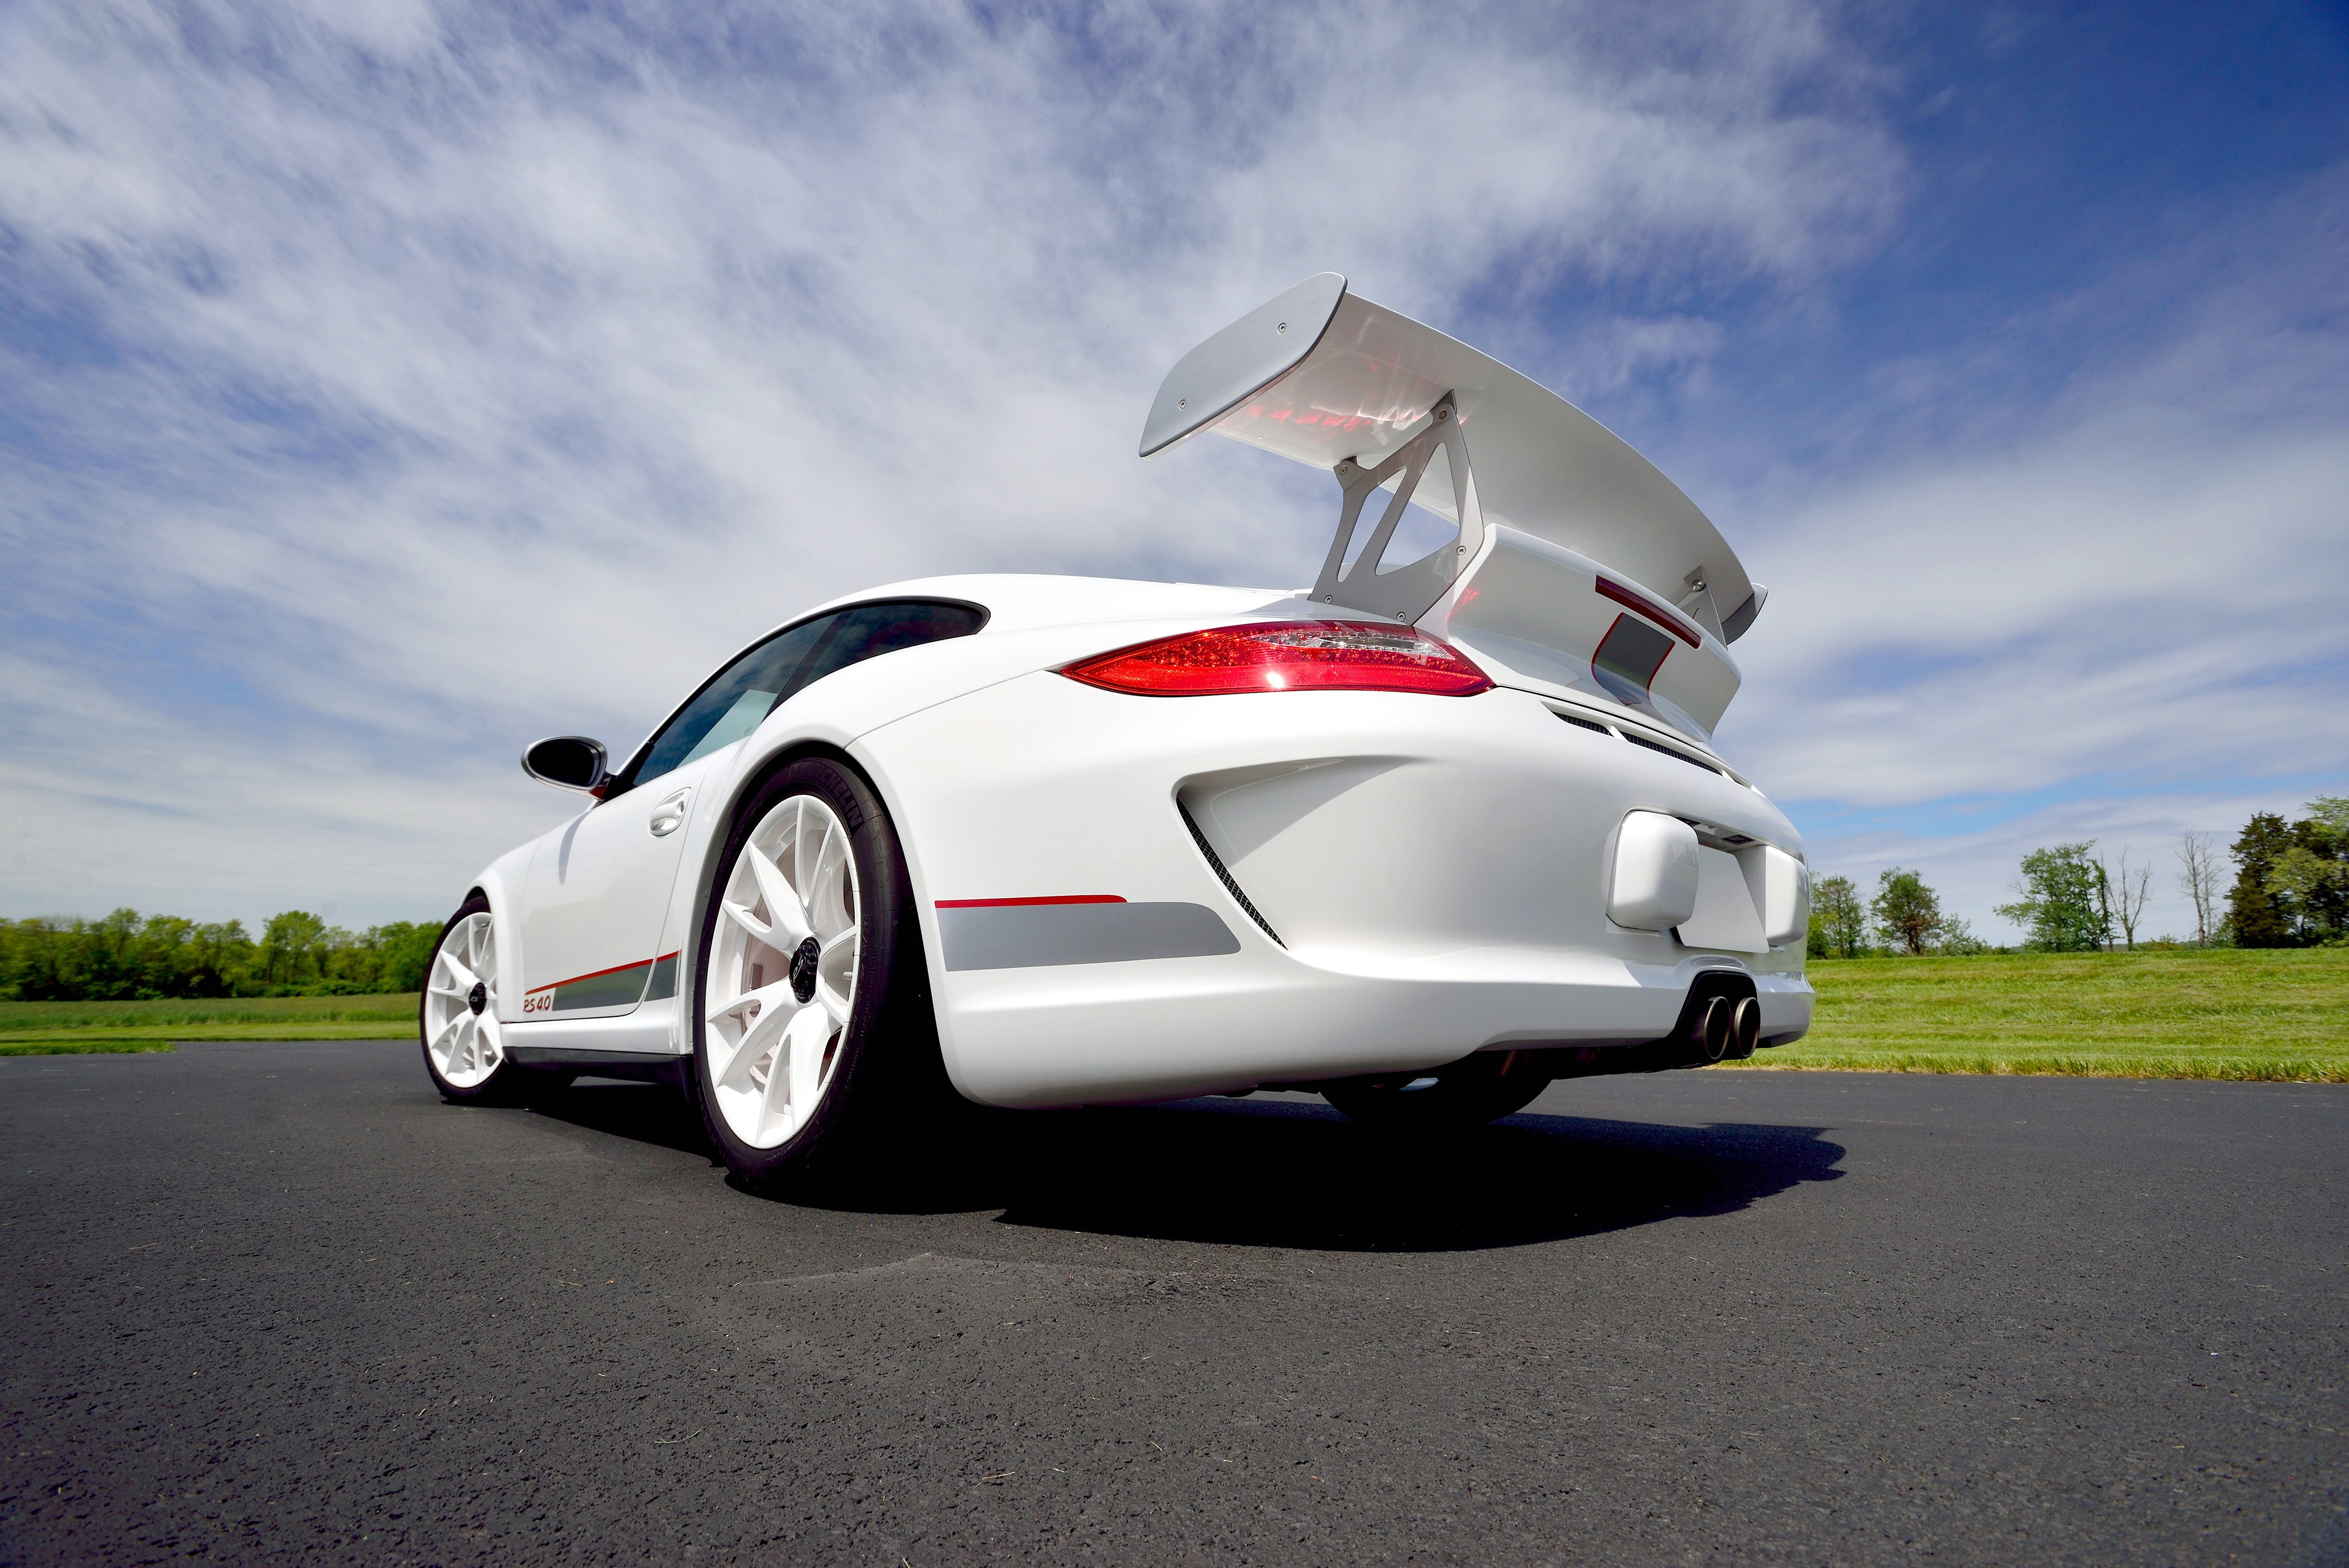 car, Porsche 911 GT3, transportation, mode of transportation